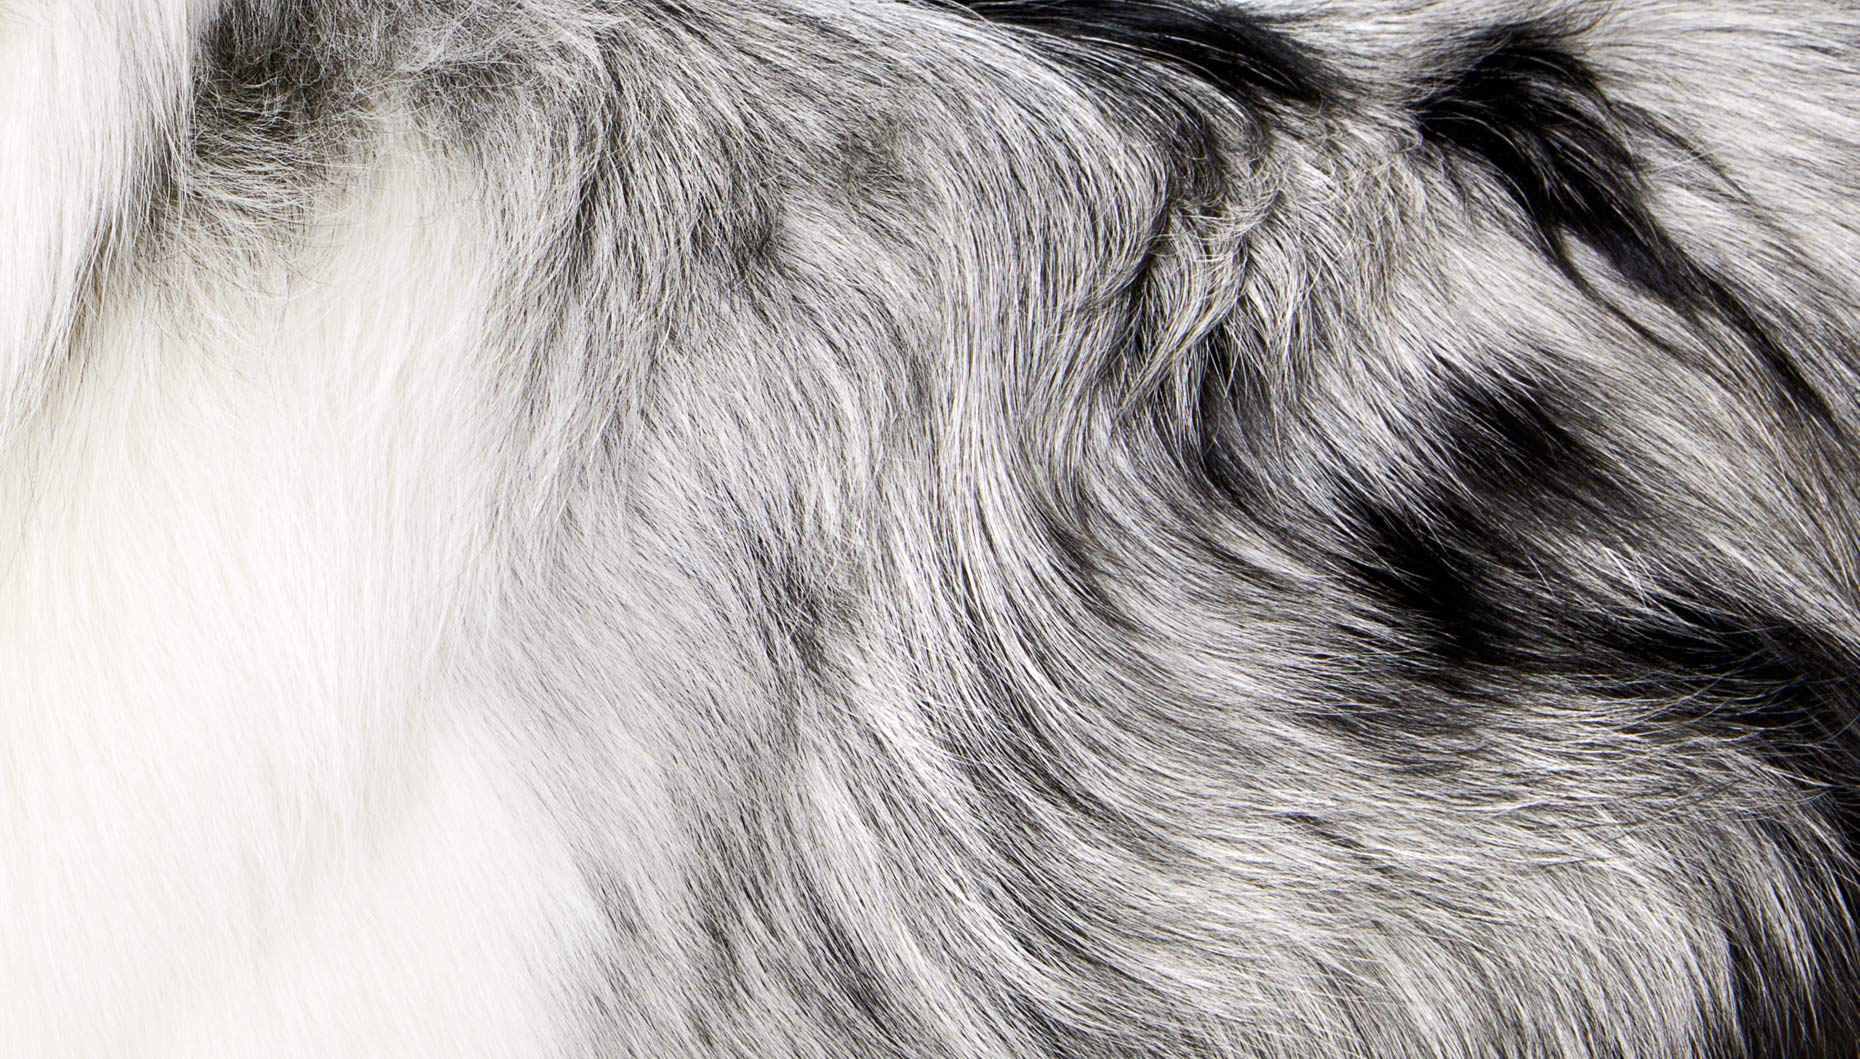 Australian Shepherd Dog hair